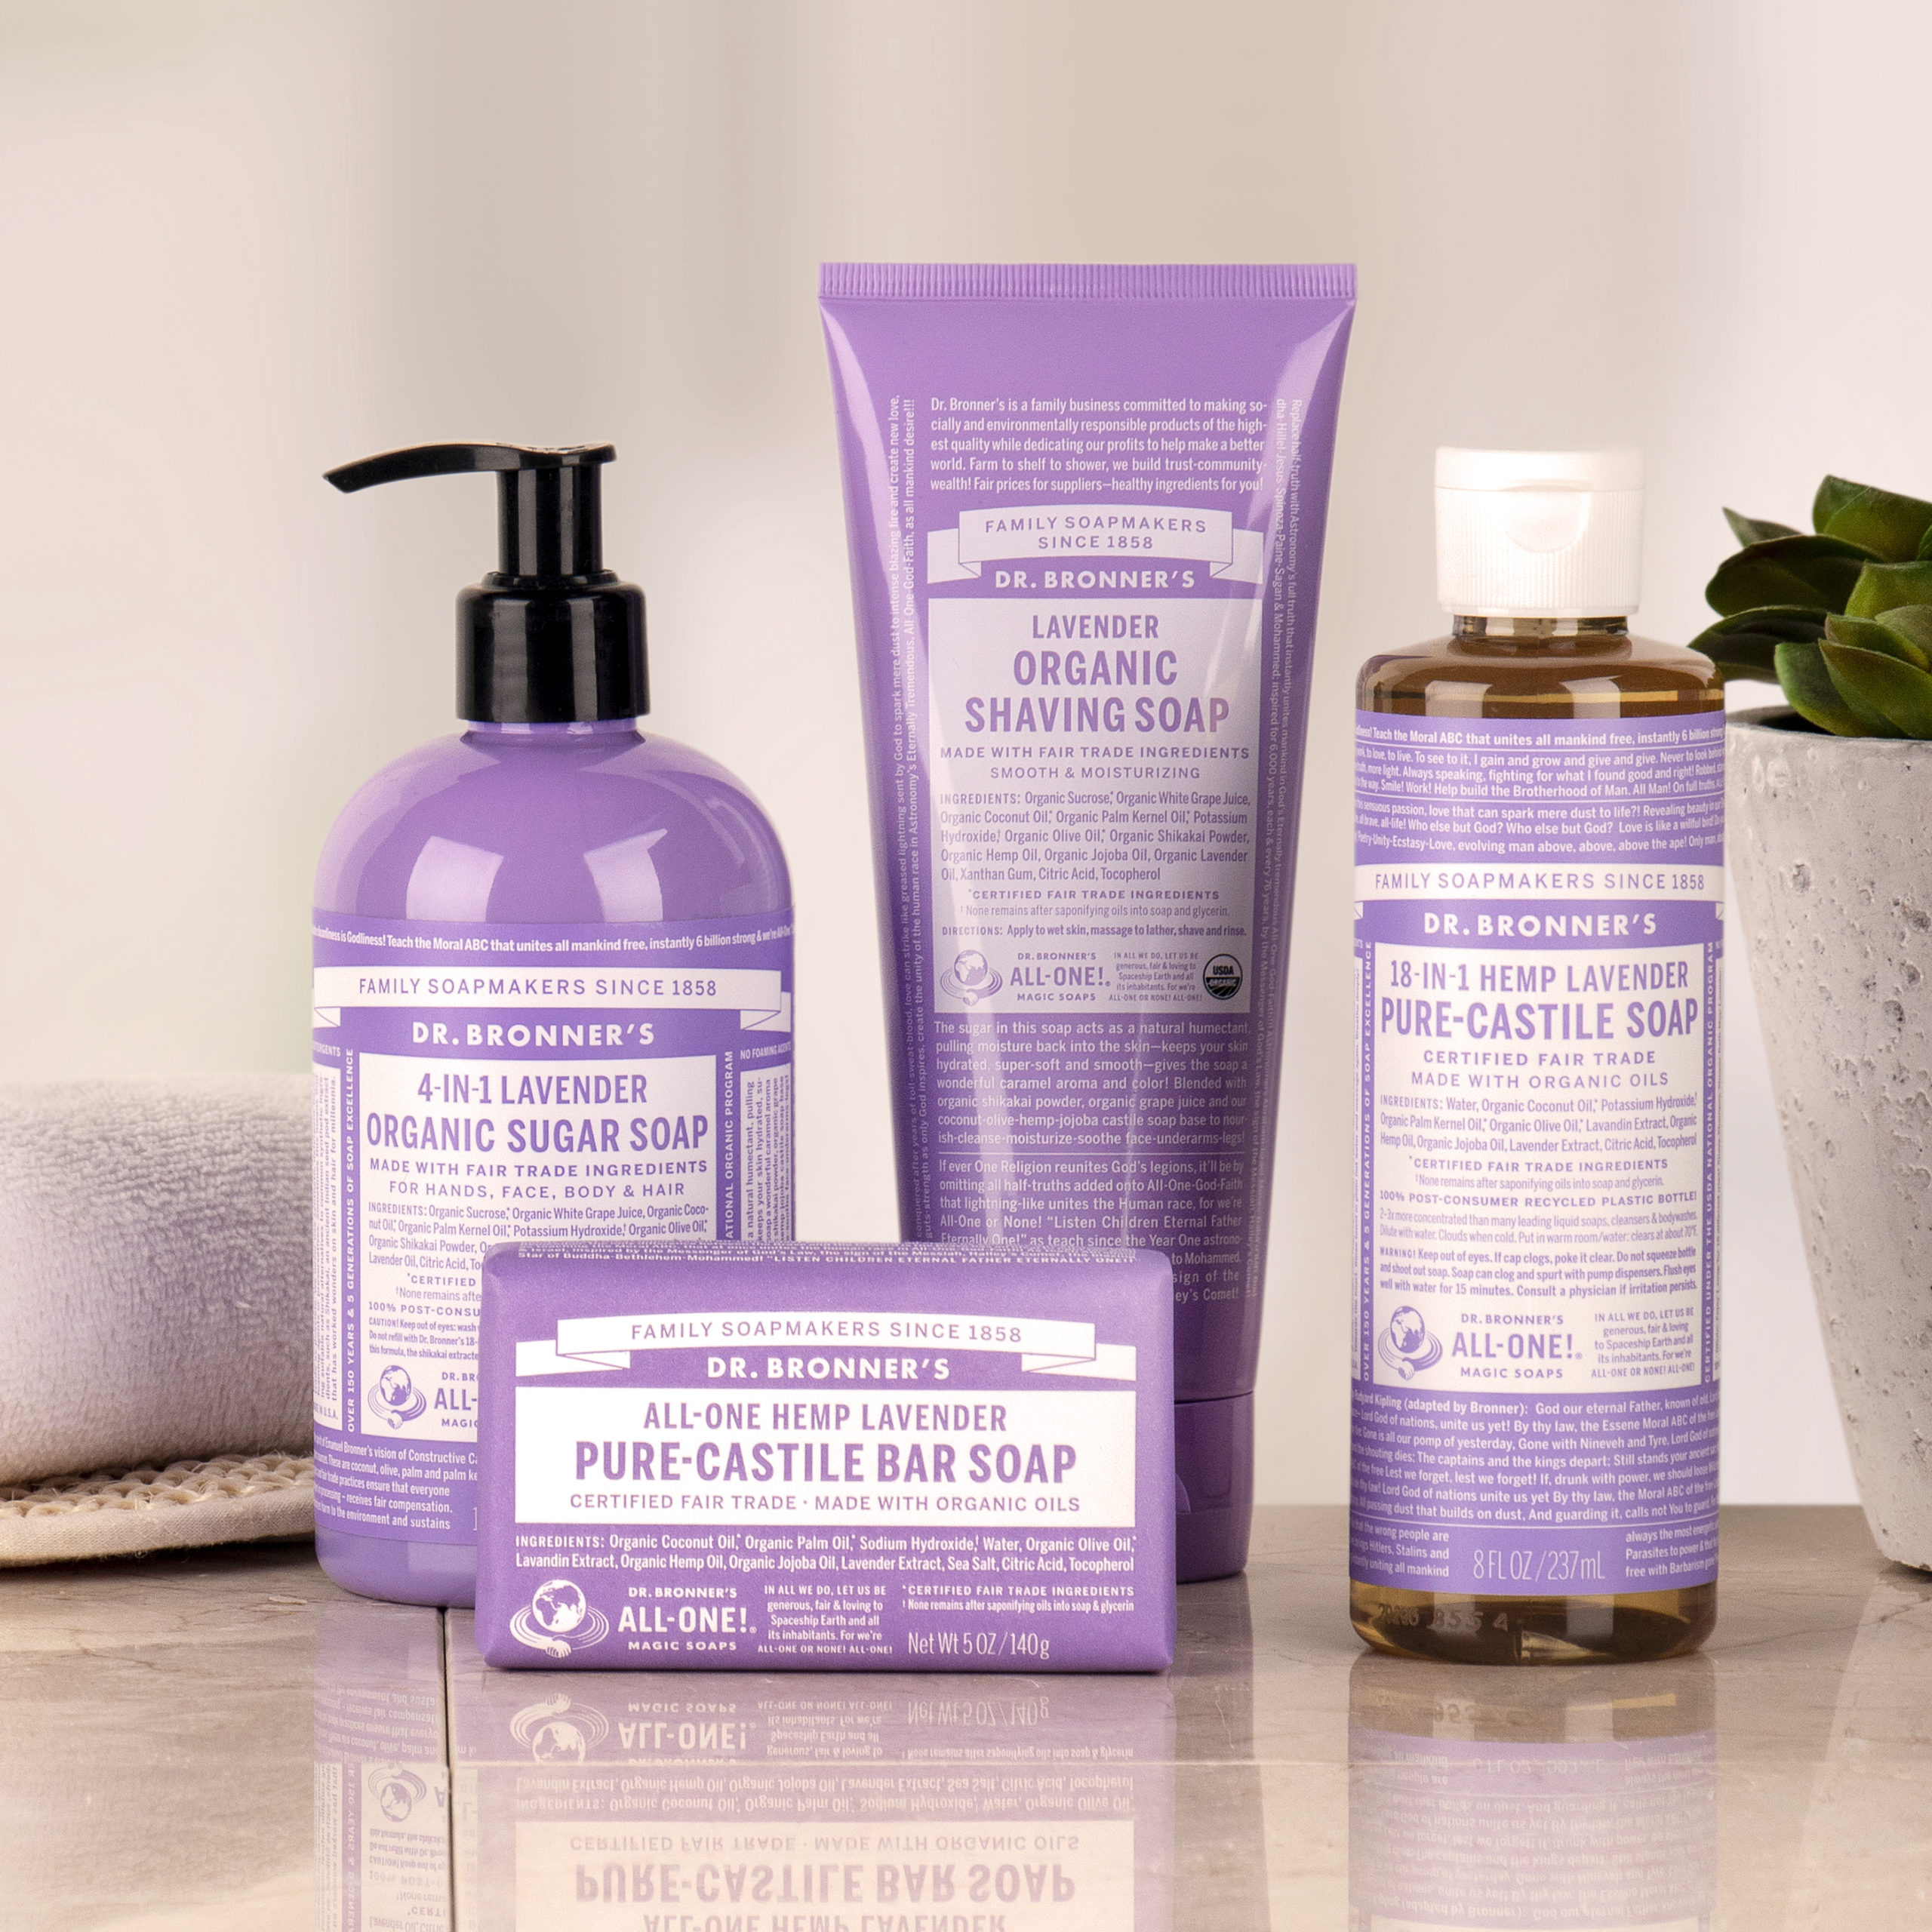 The Grandpa Soap Company Launches Natural Haircare